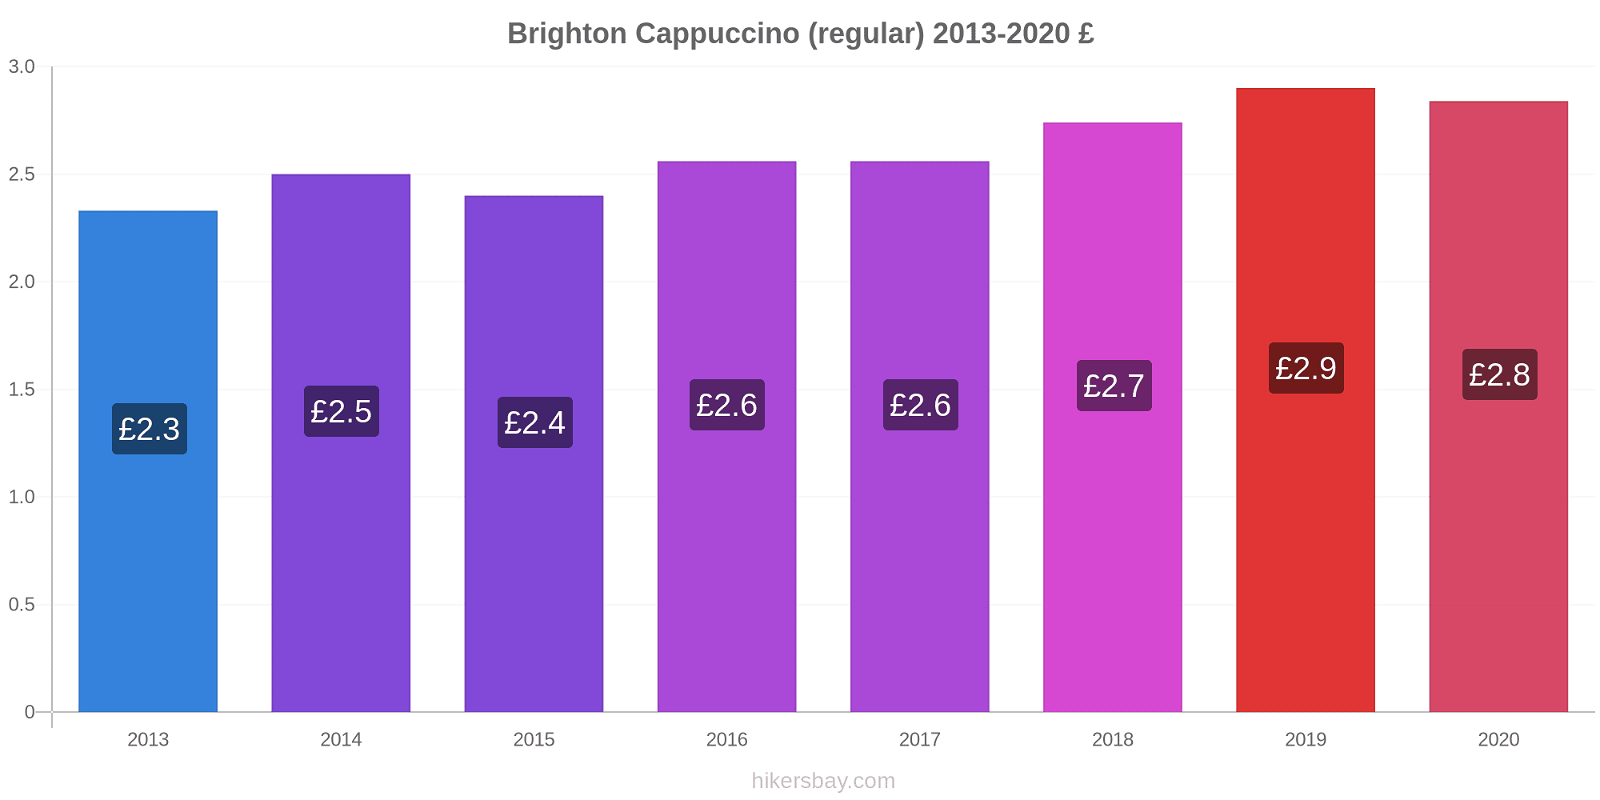 Brighton price changes Cappuccino (regular) hikersbay.com